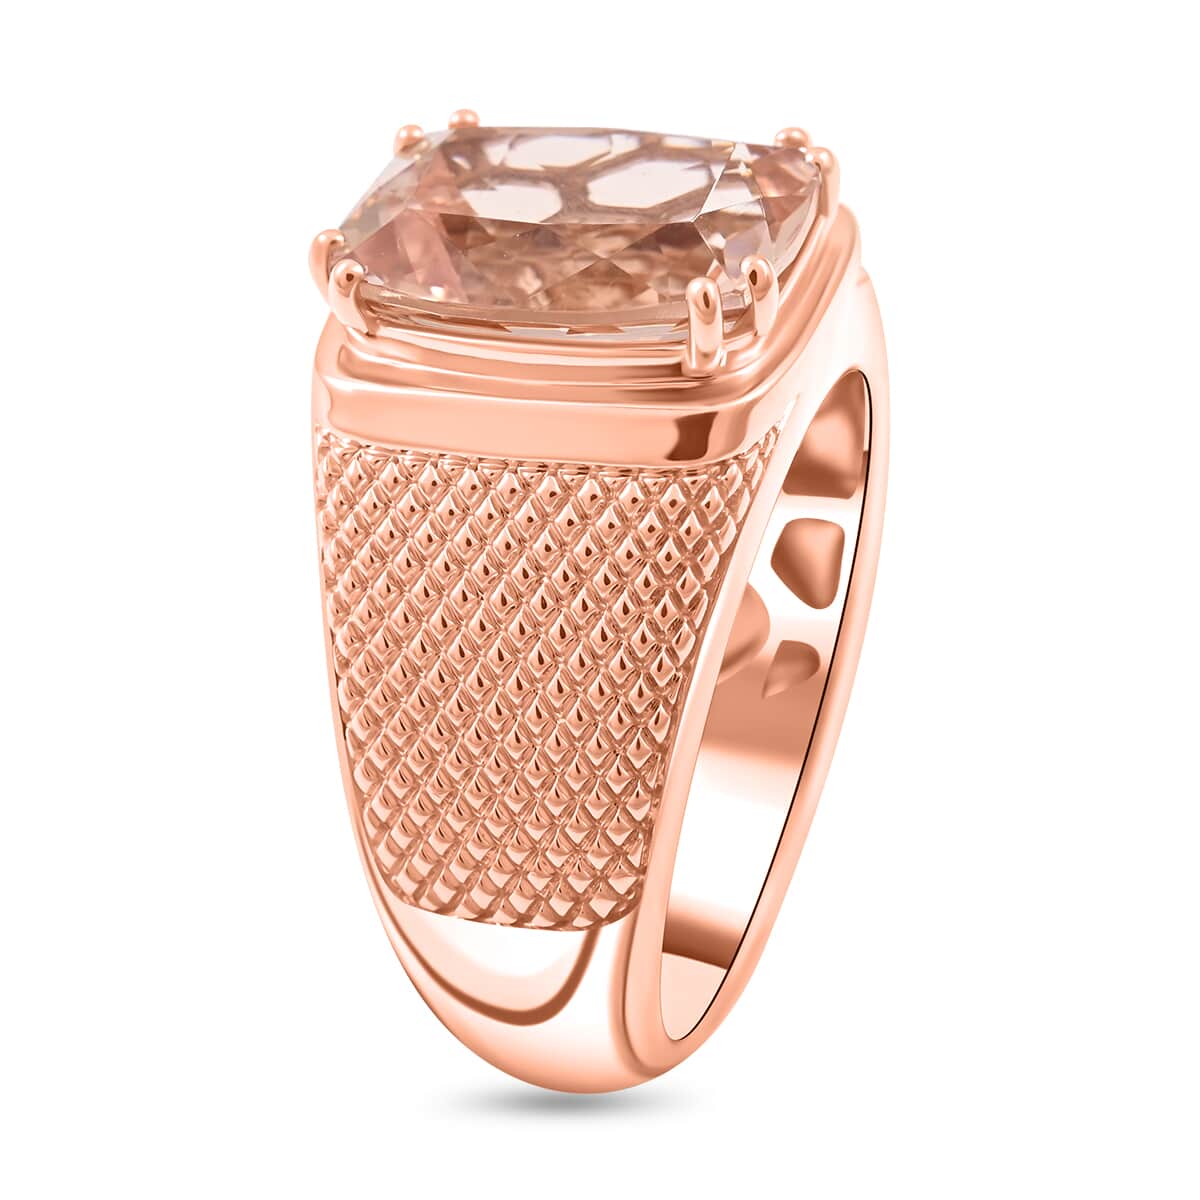 Luxoro 10K Rose Gold AAA Marropino Morganite, Diamond (G-H, I2) Men's Ring (Size 10.0) (7.20 g) 4.65 ctw image number 3